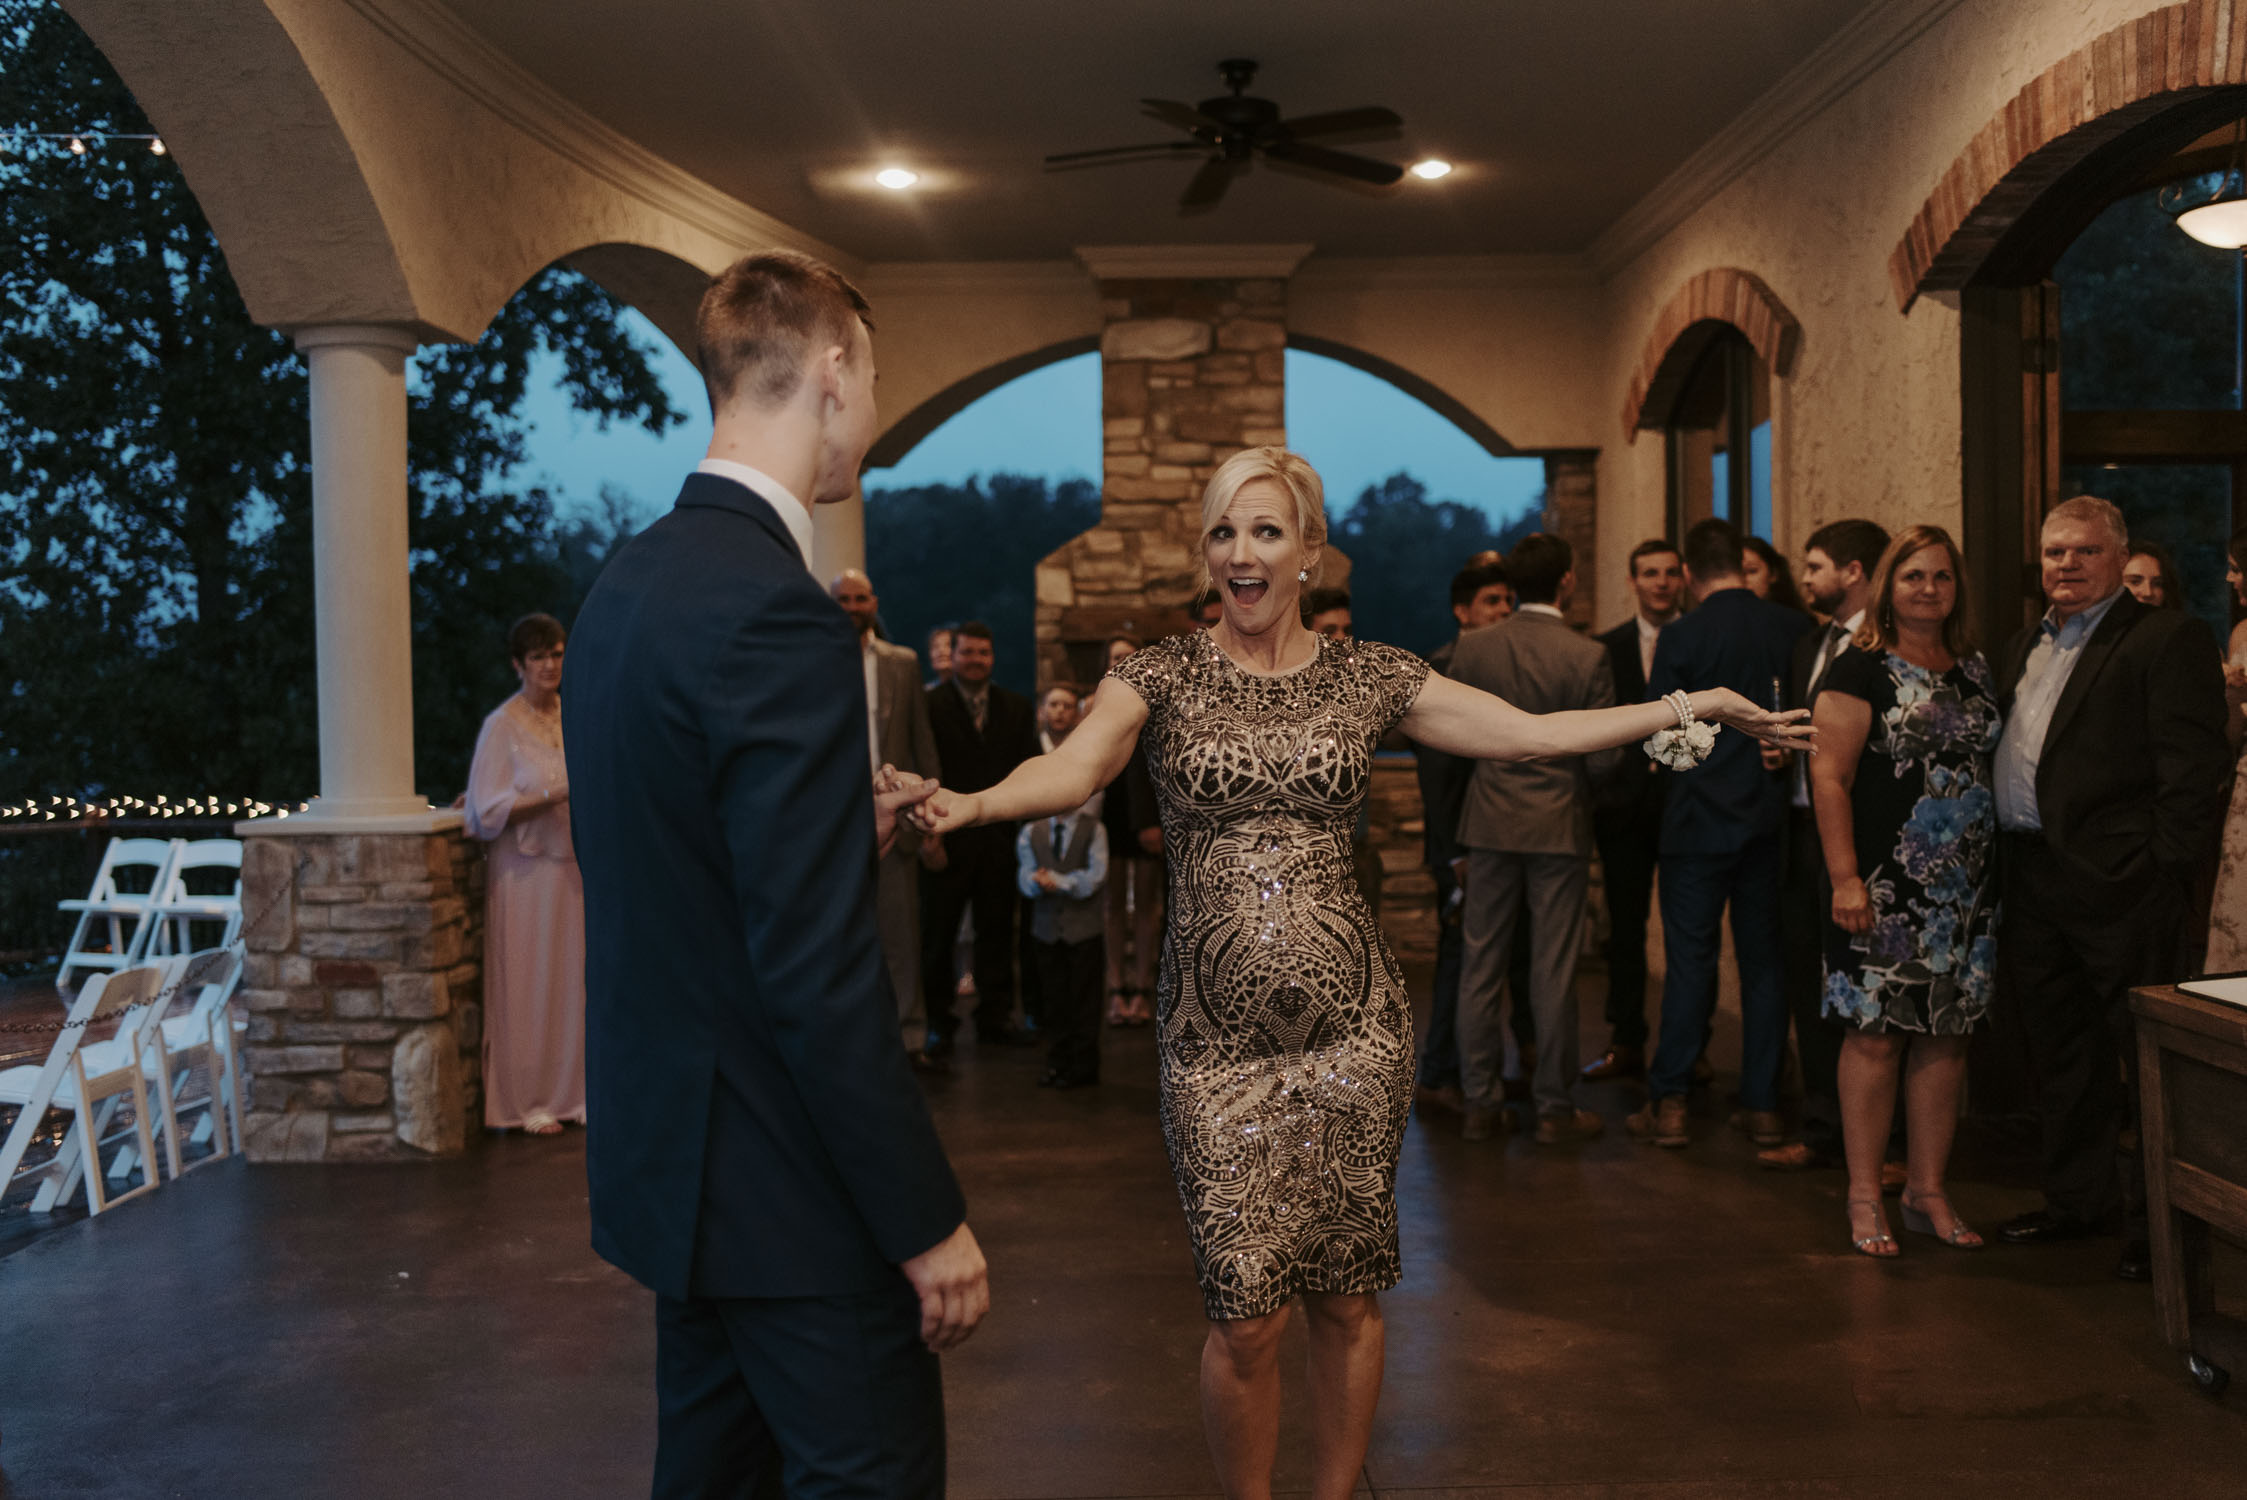 Rainy Bella Collina Wedding - Reception Dancing | Kayli LaFon Photography, Greensboro Winston-Salem NC Wedding Photographer